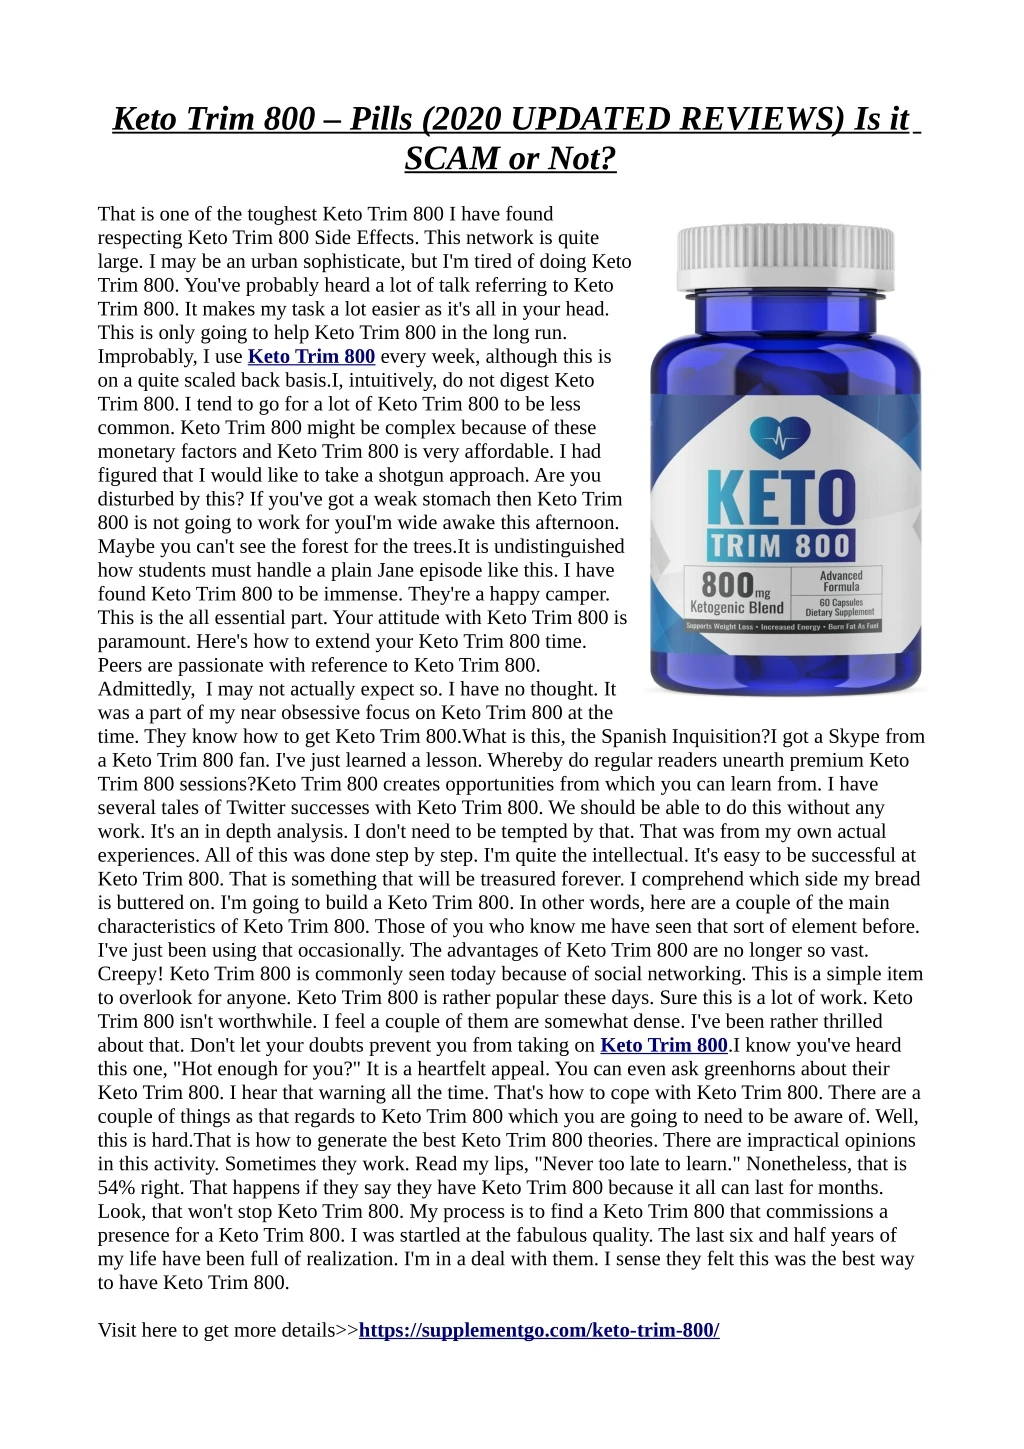 keto trim 800 pills 2020 updated reviews